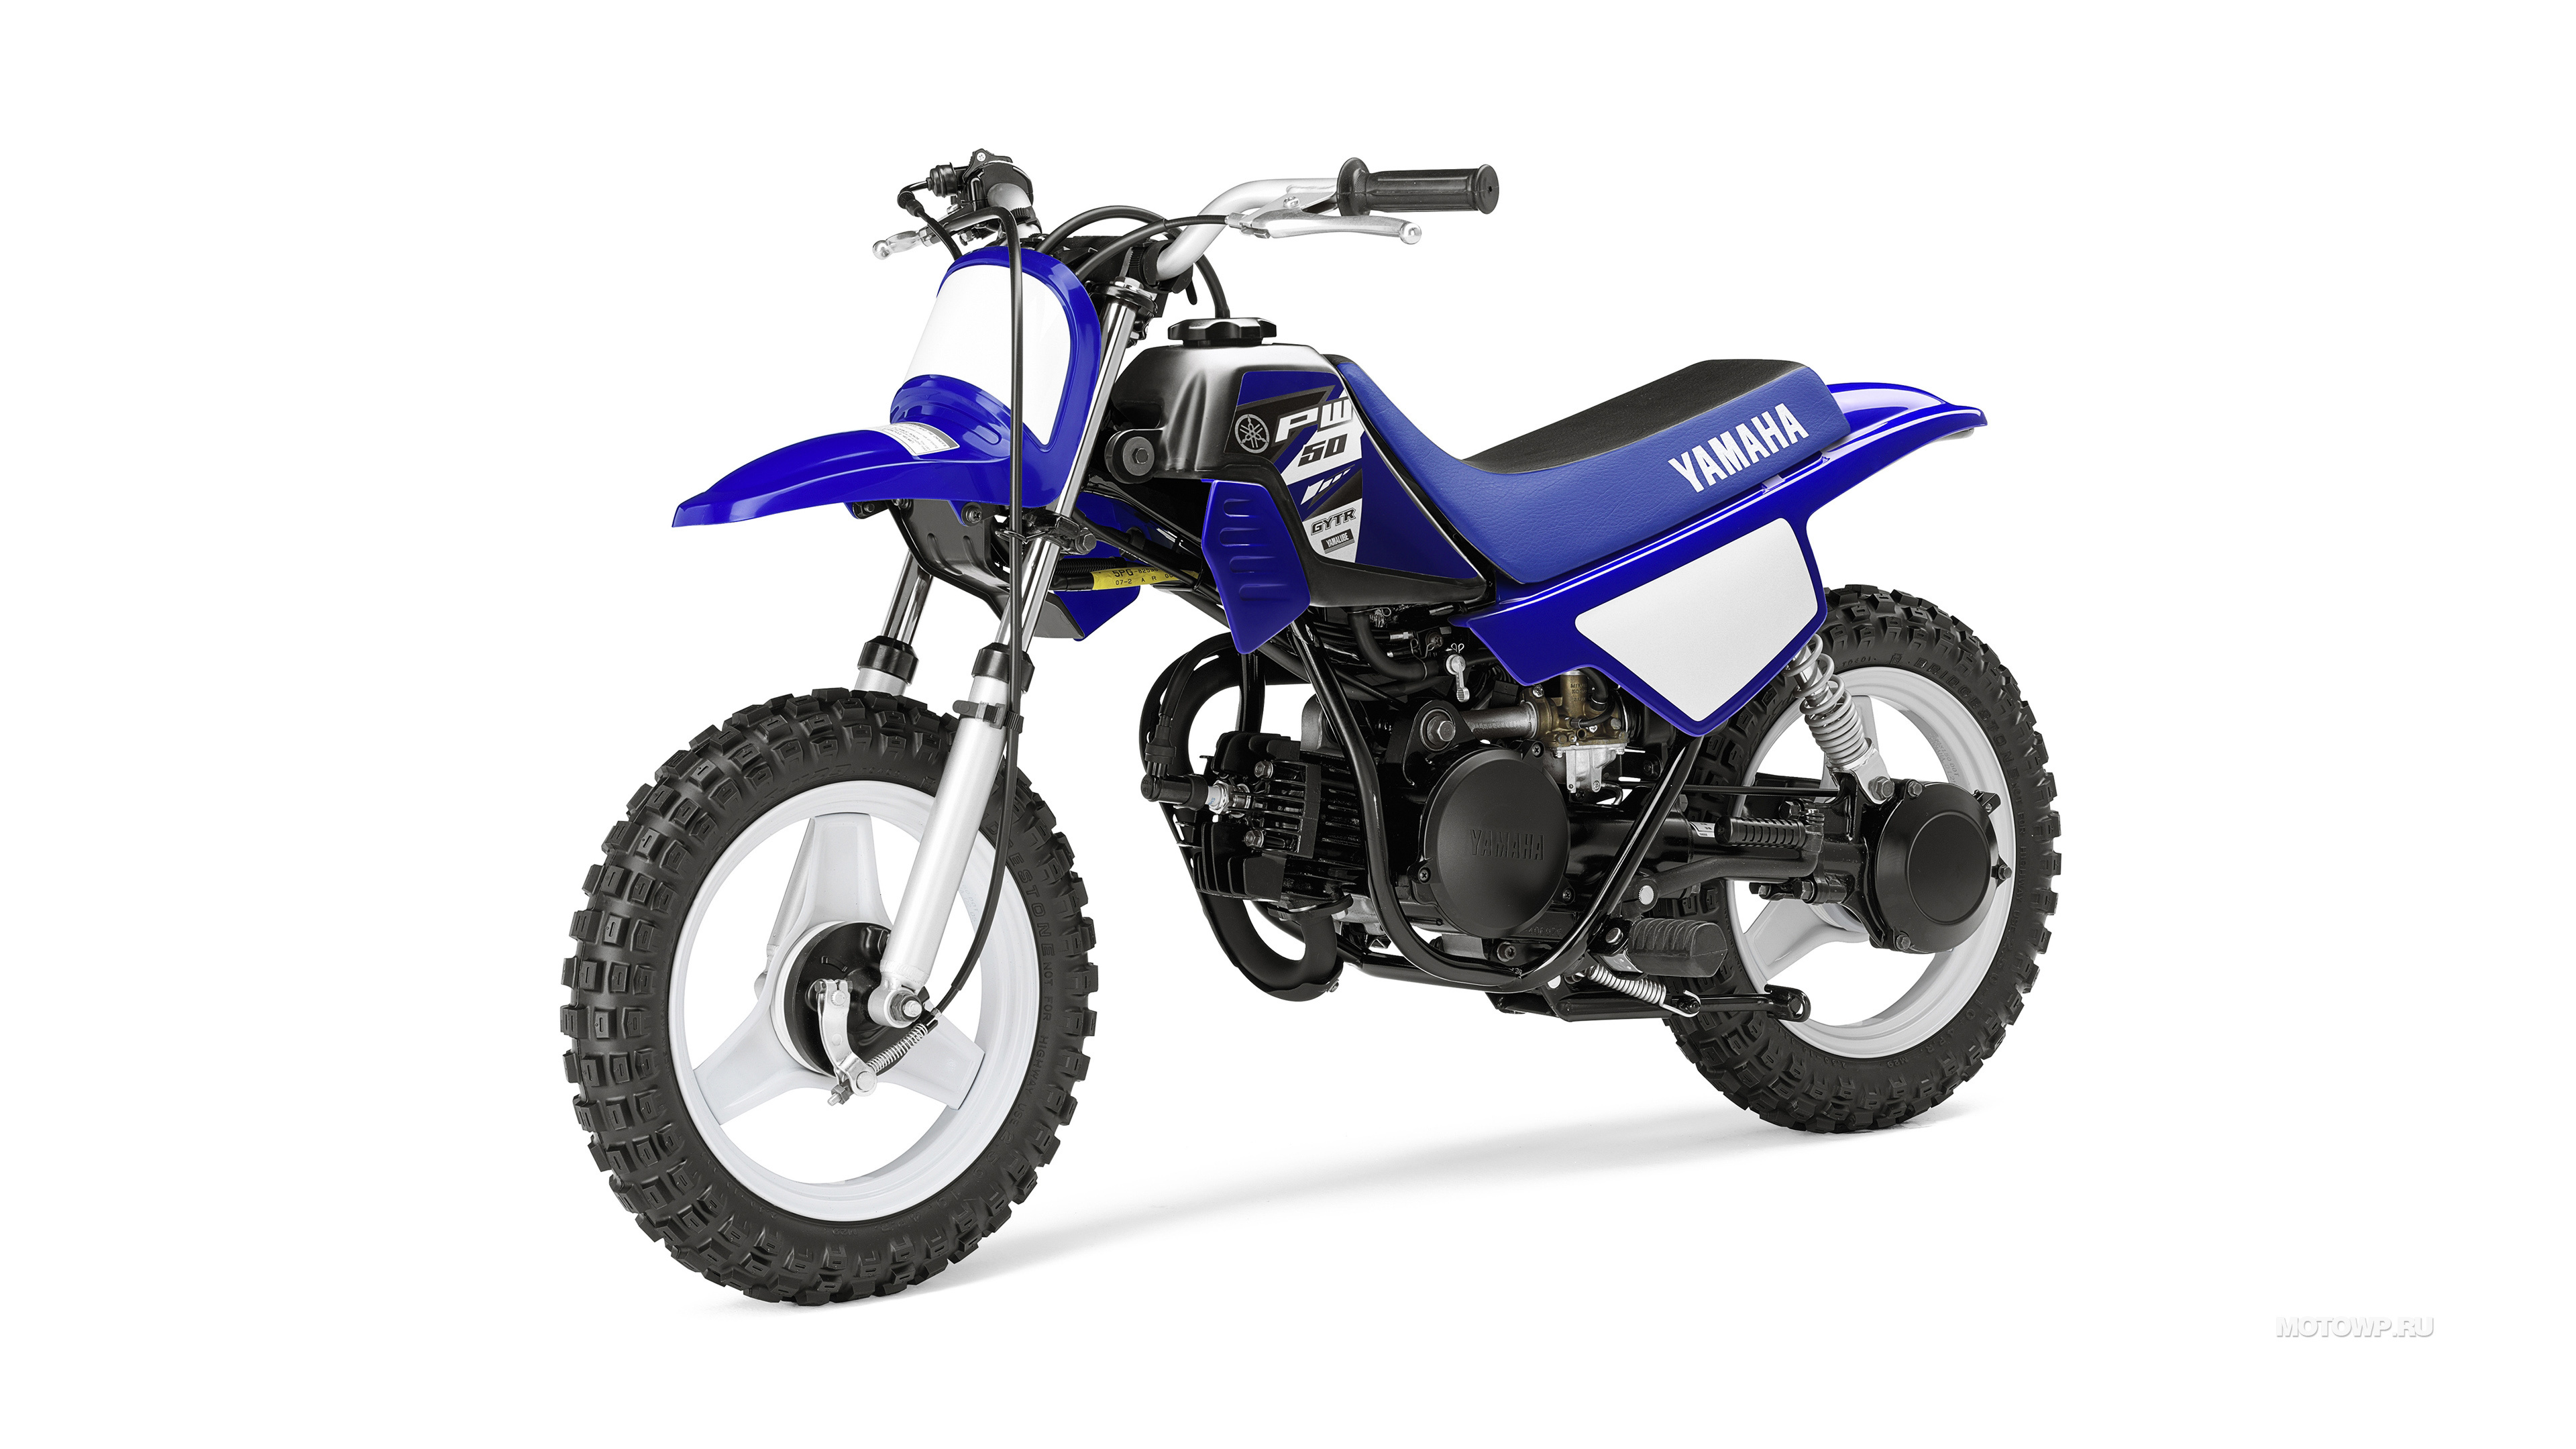 Yamaha PW50 2015, Youth offroad bike, PW Series, Fun and easy ride, 3840x2160 4K Desktop